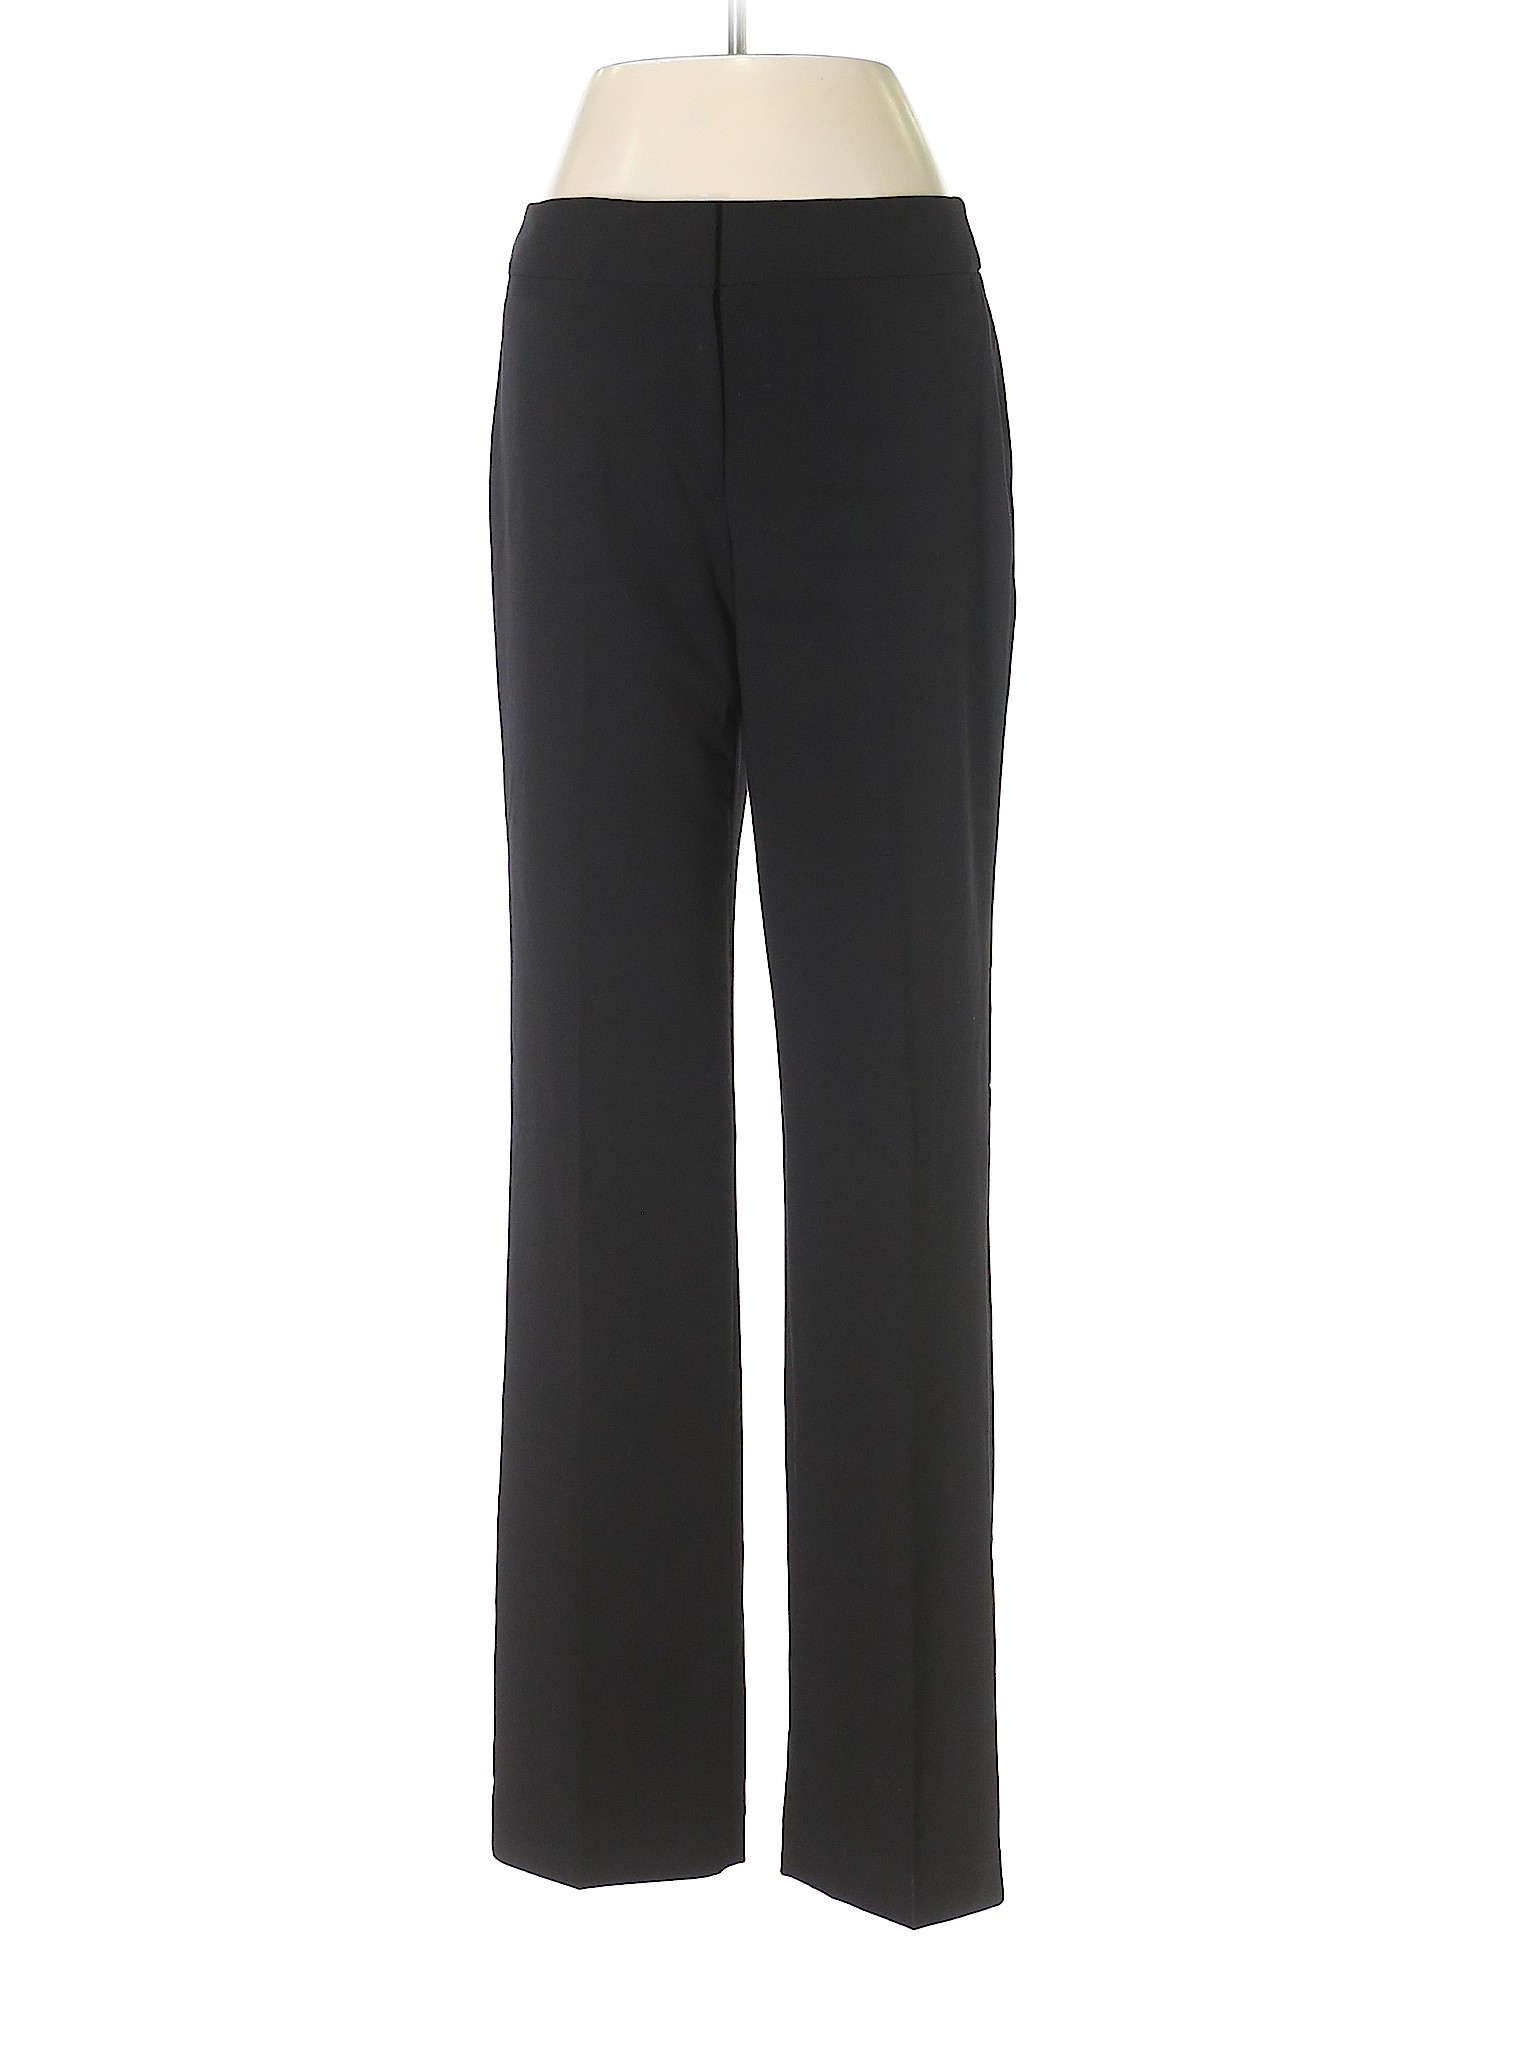 Liz Claiborne Career Women Black Dress Pants 4 | eBay